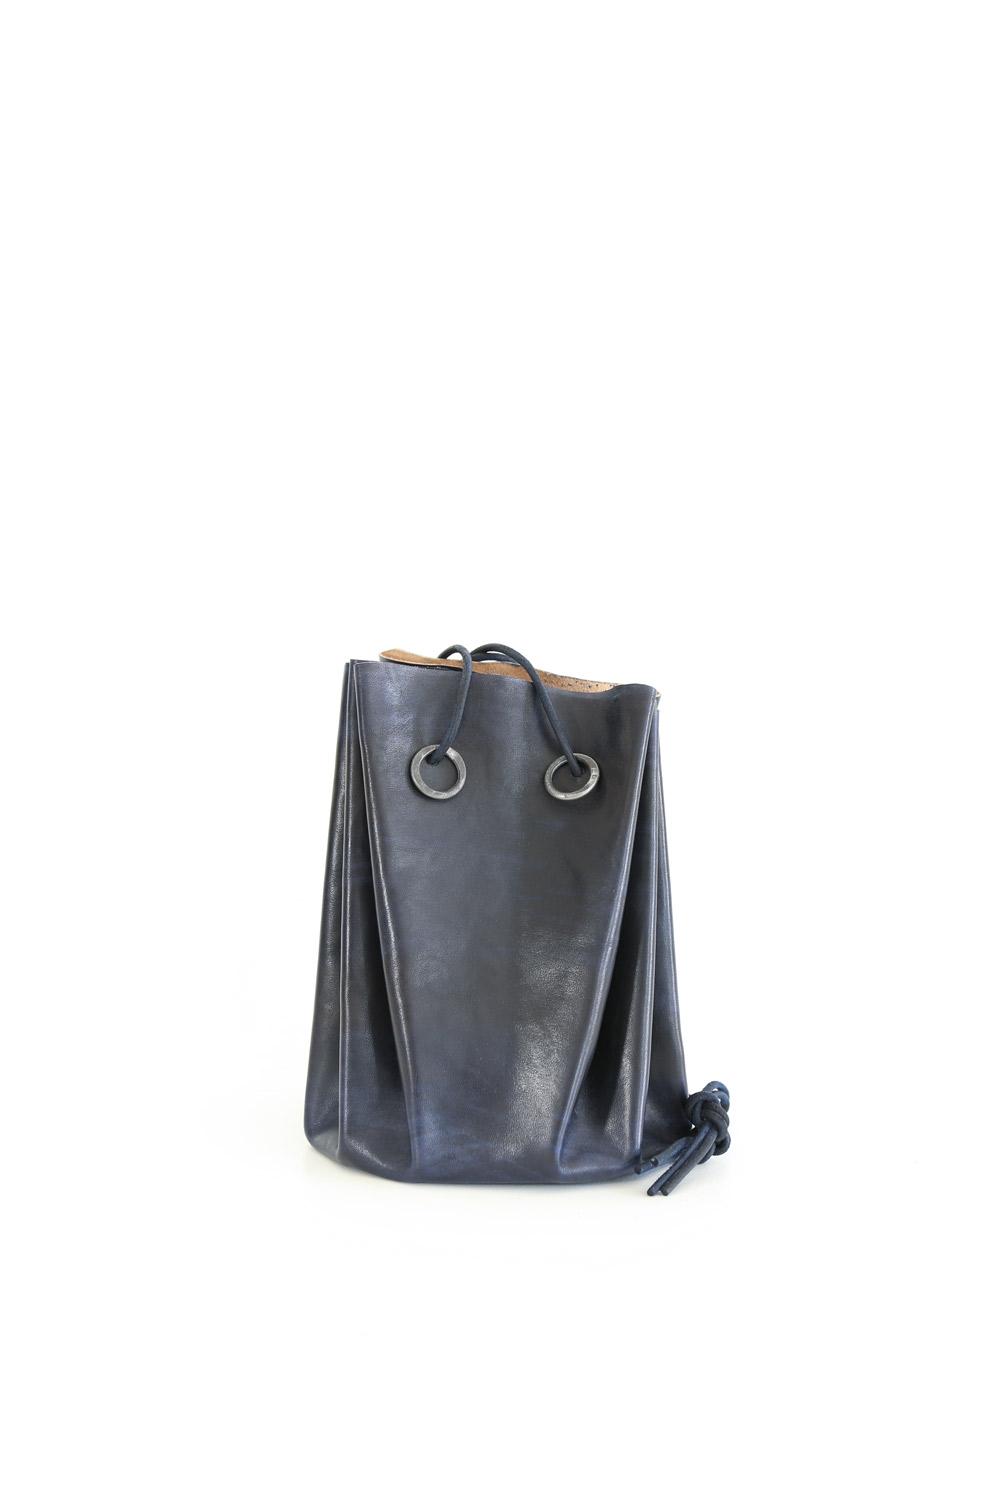 shop - Tagliovivo | Artisanal Leather Bags